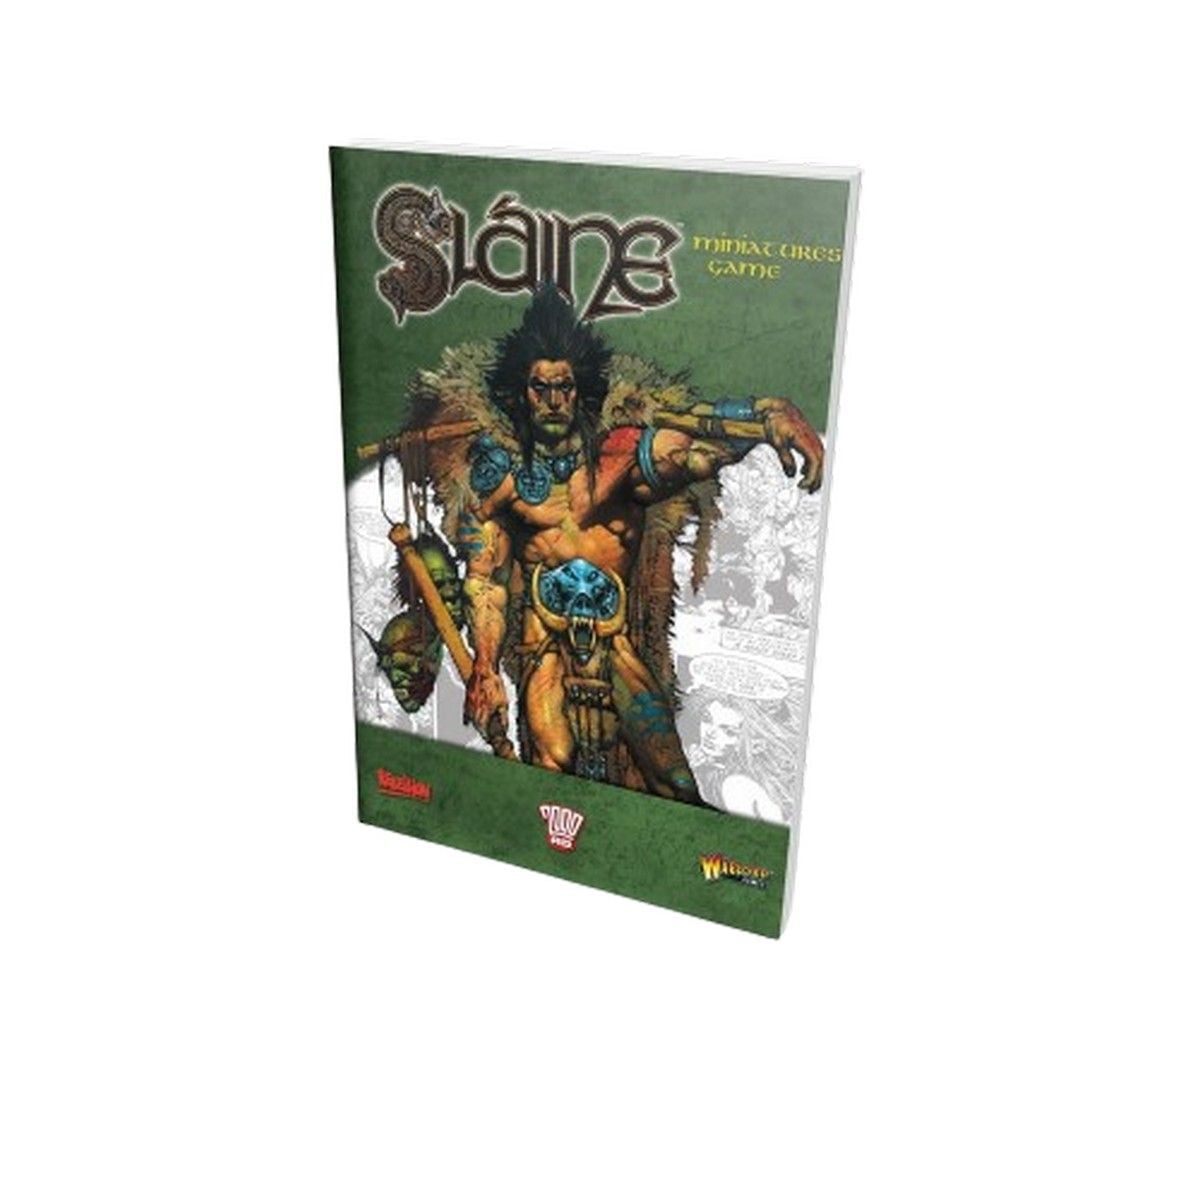 Slaine the Miniatures Game - Rulebook